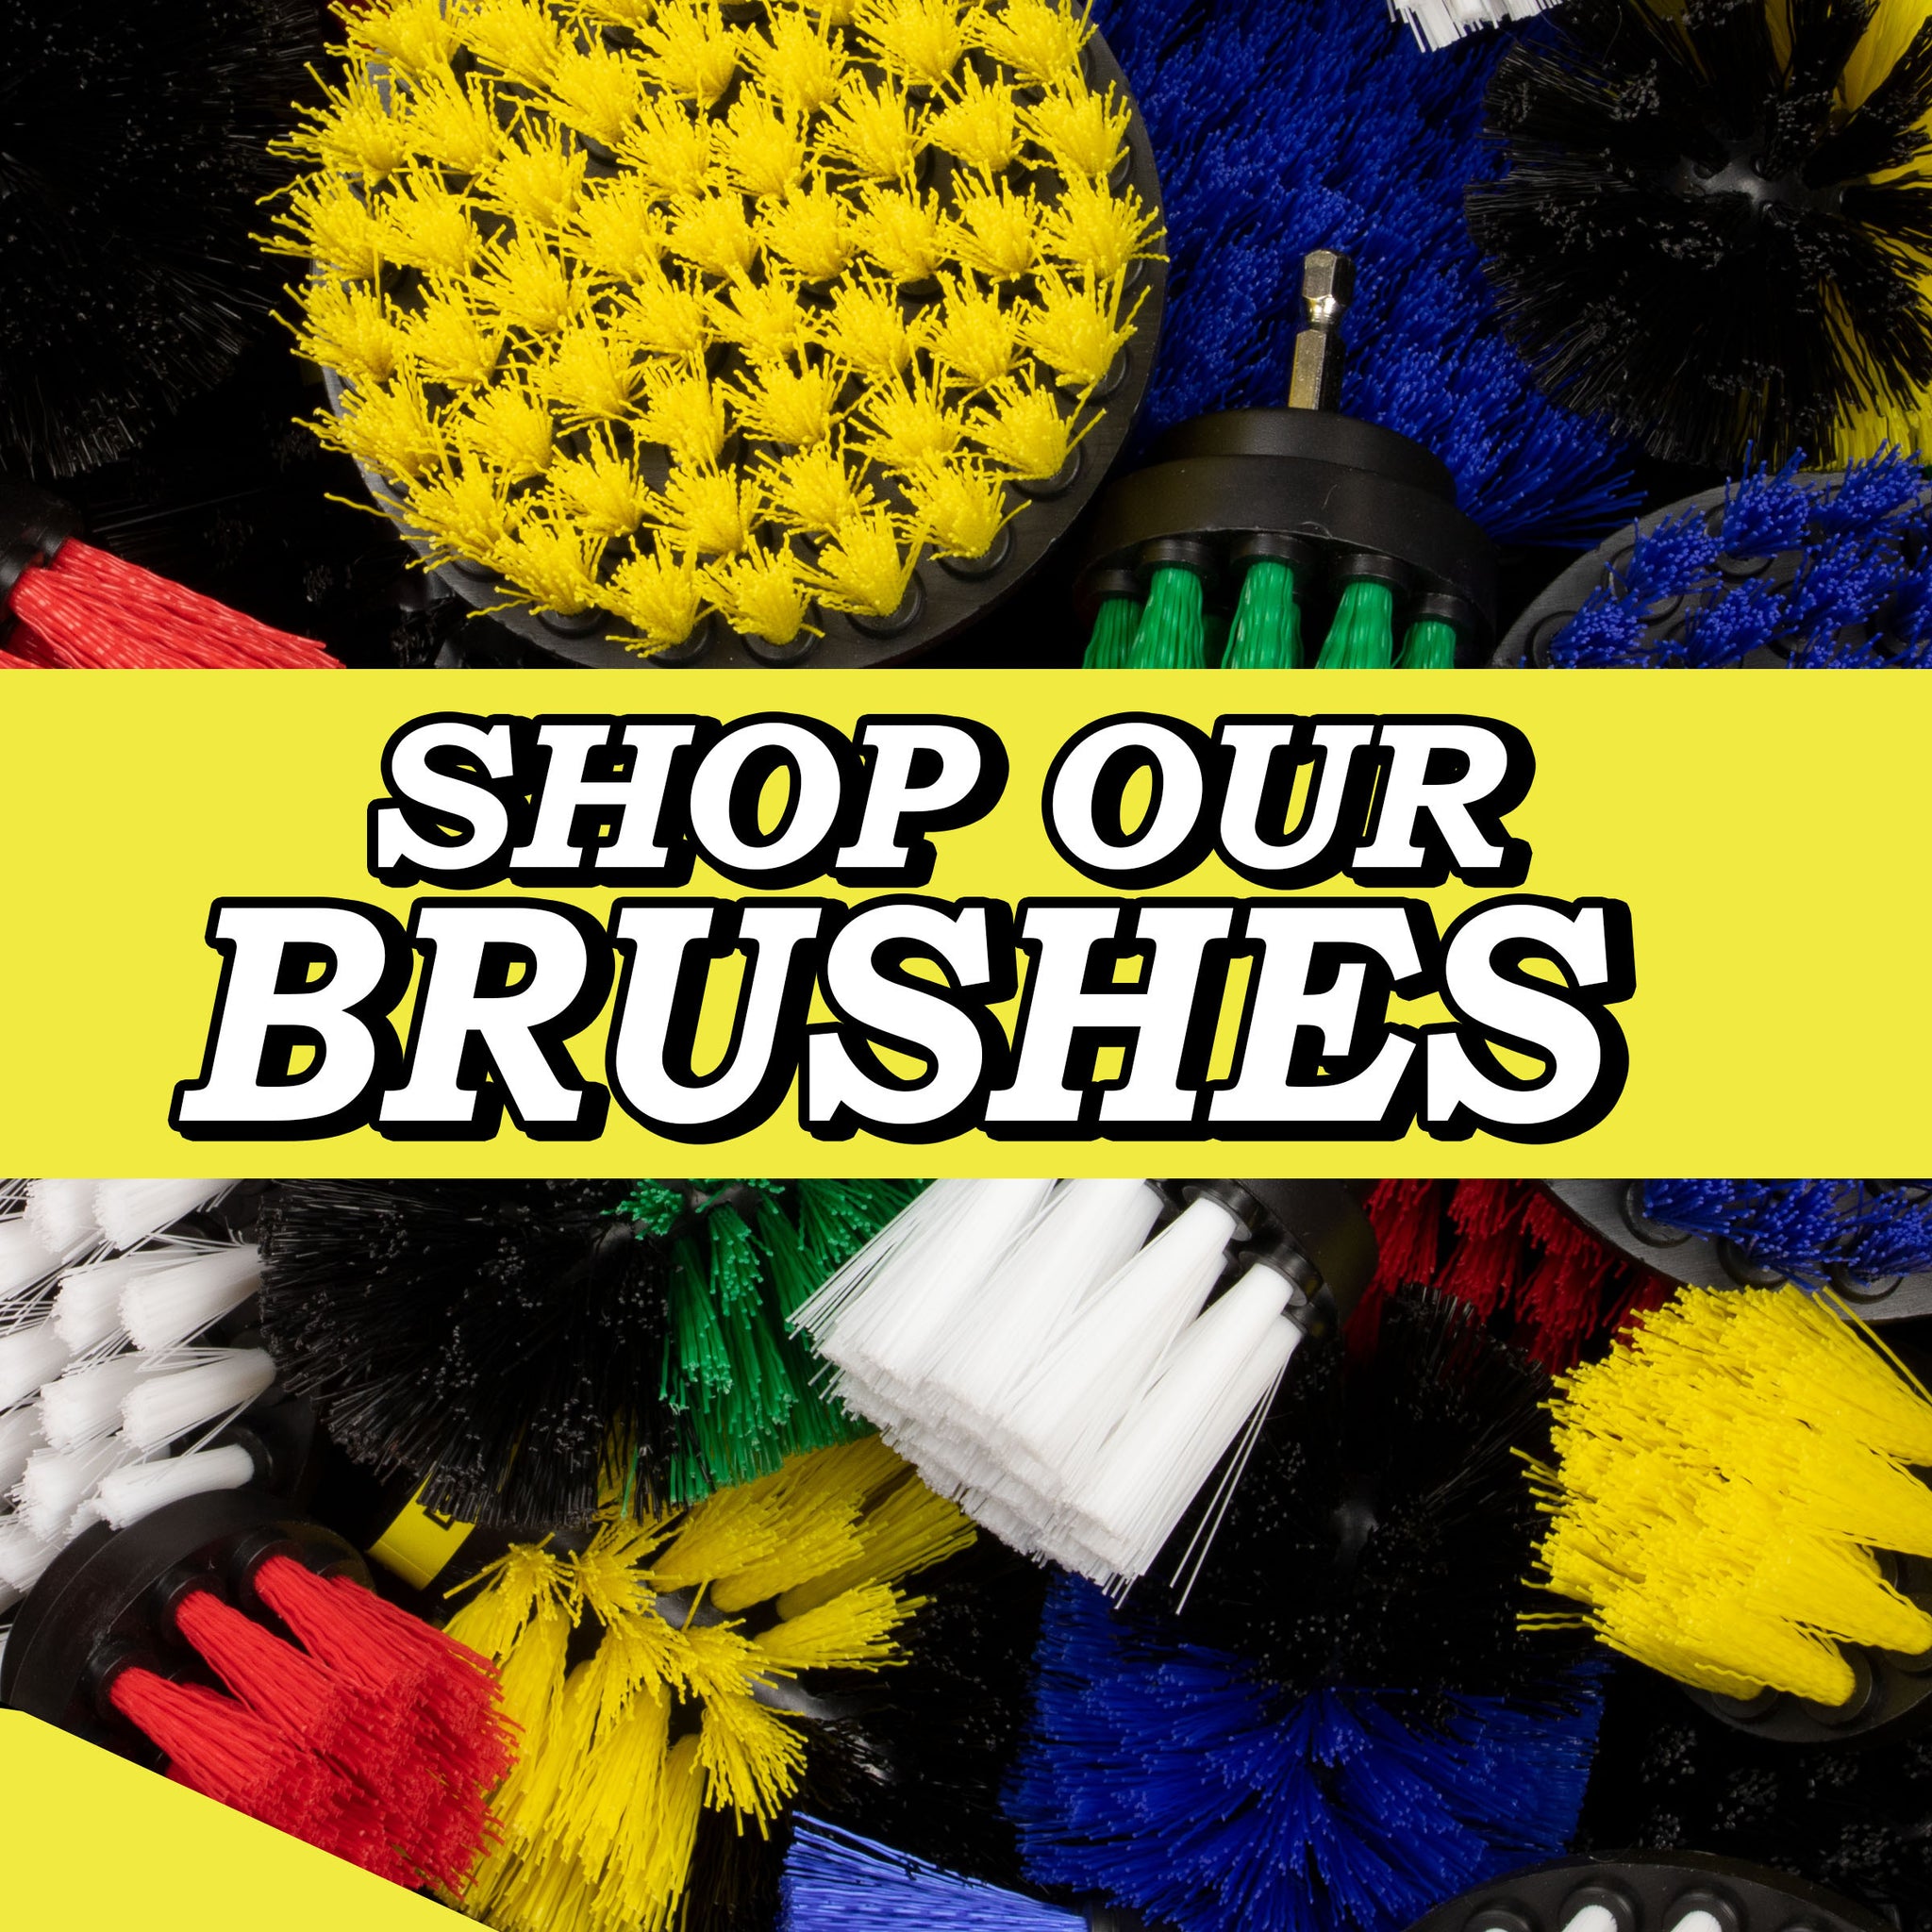 Brushes and Brush Kits